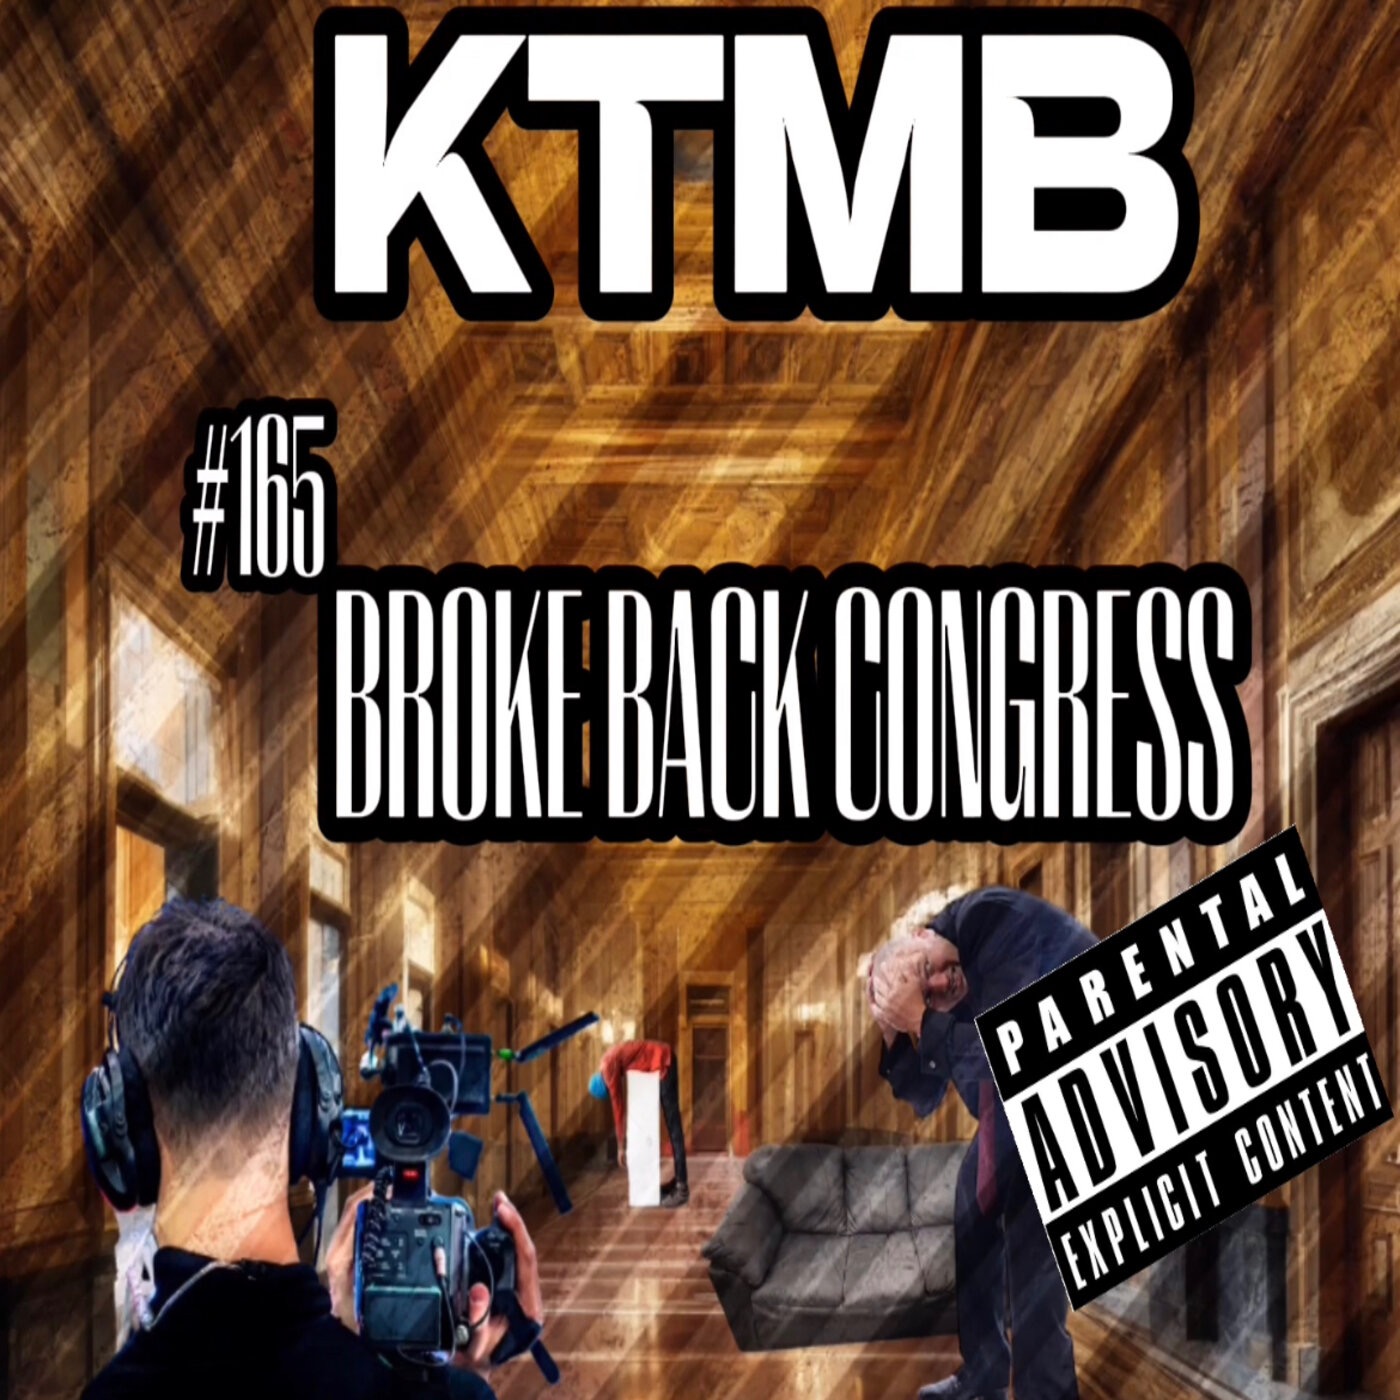 #165 “Broke Back Congress” W/ Two Doomed men podcast